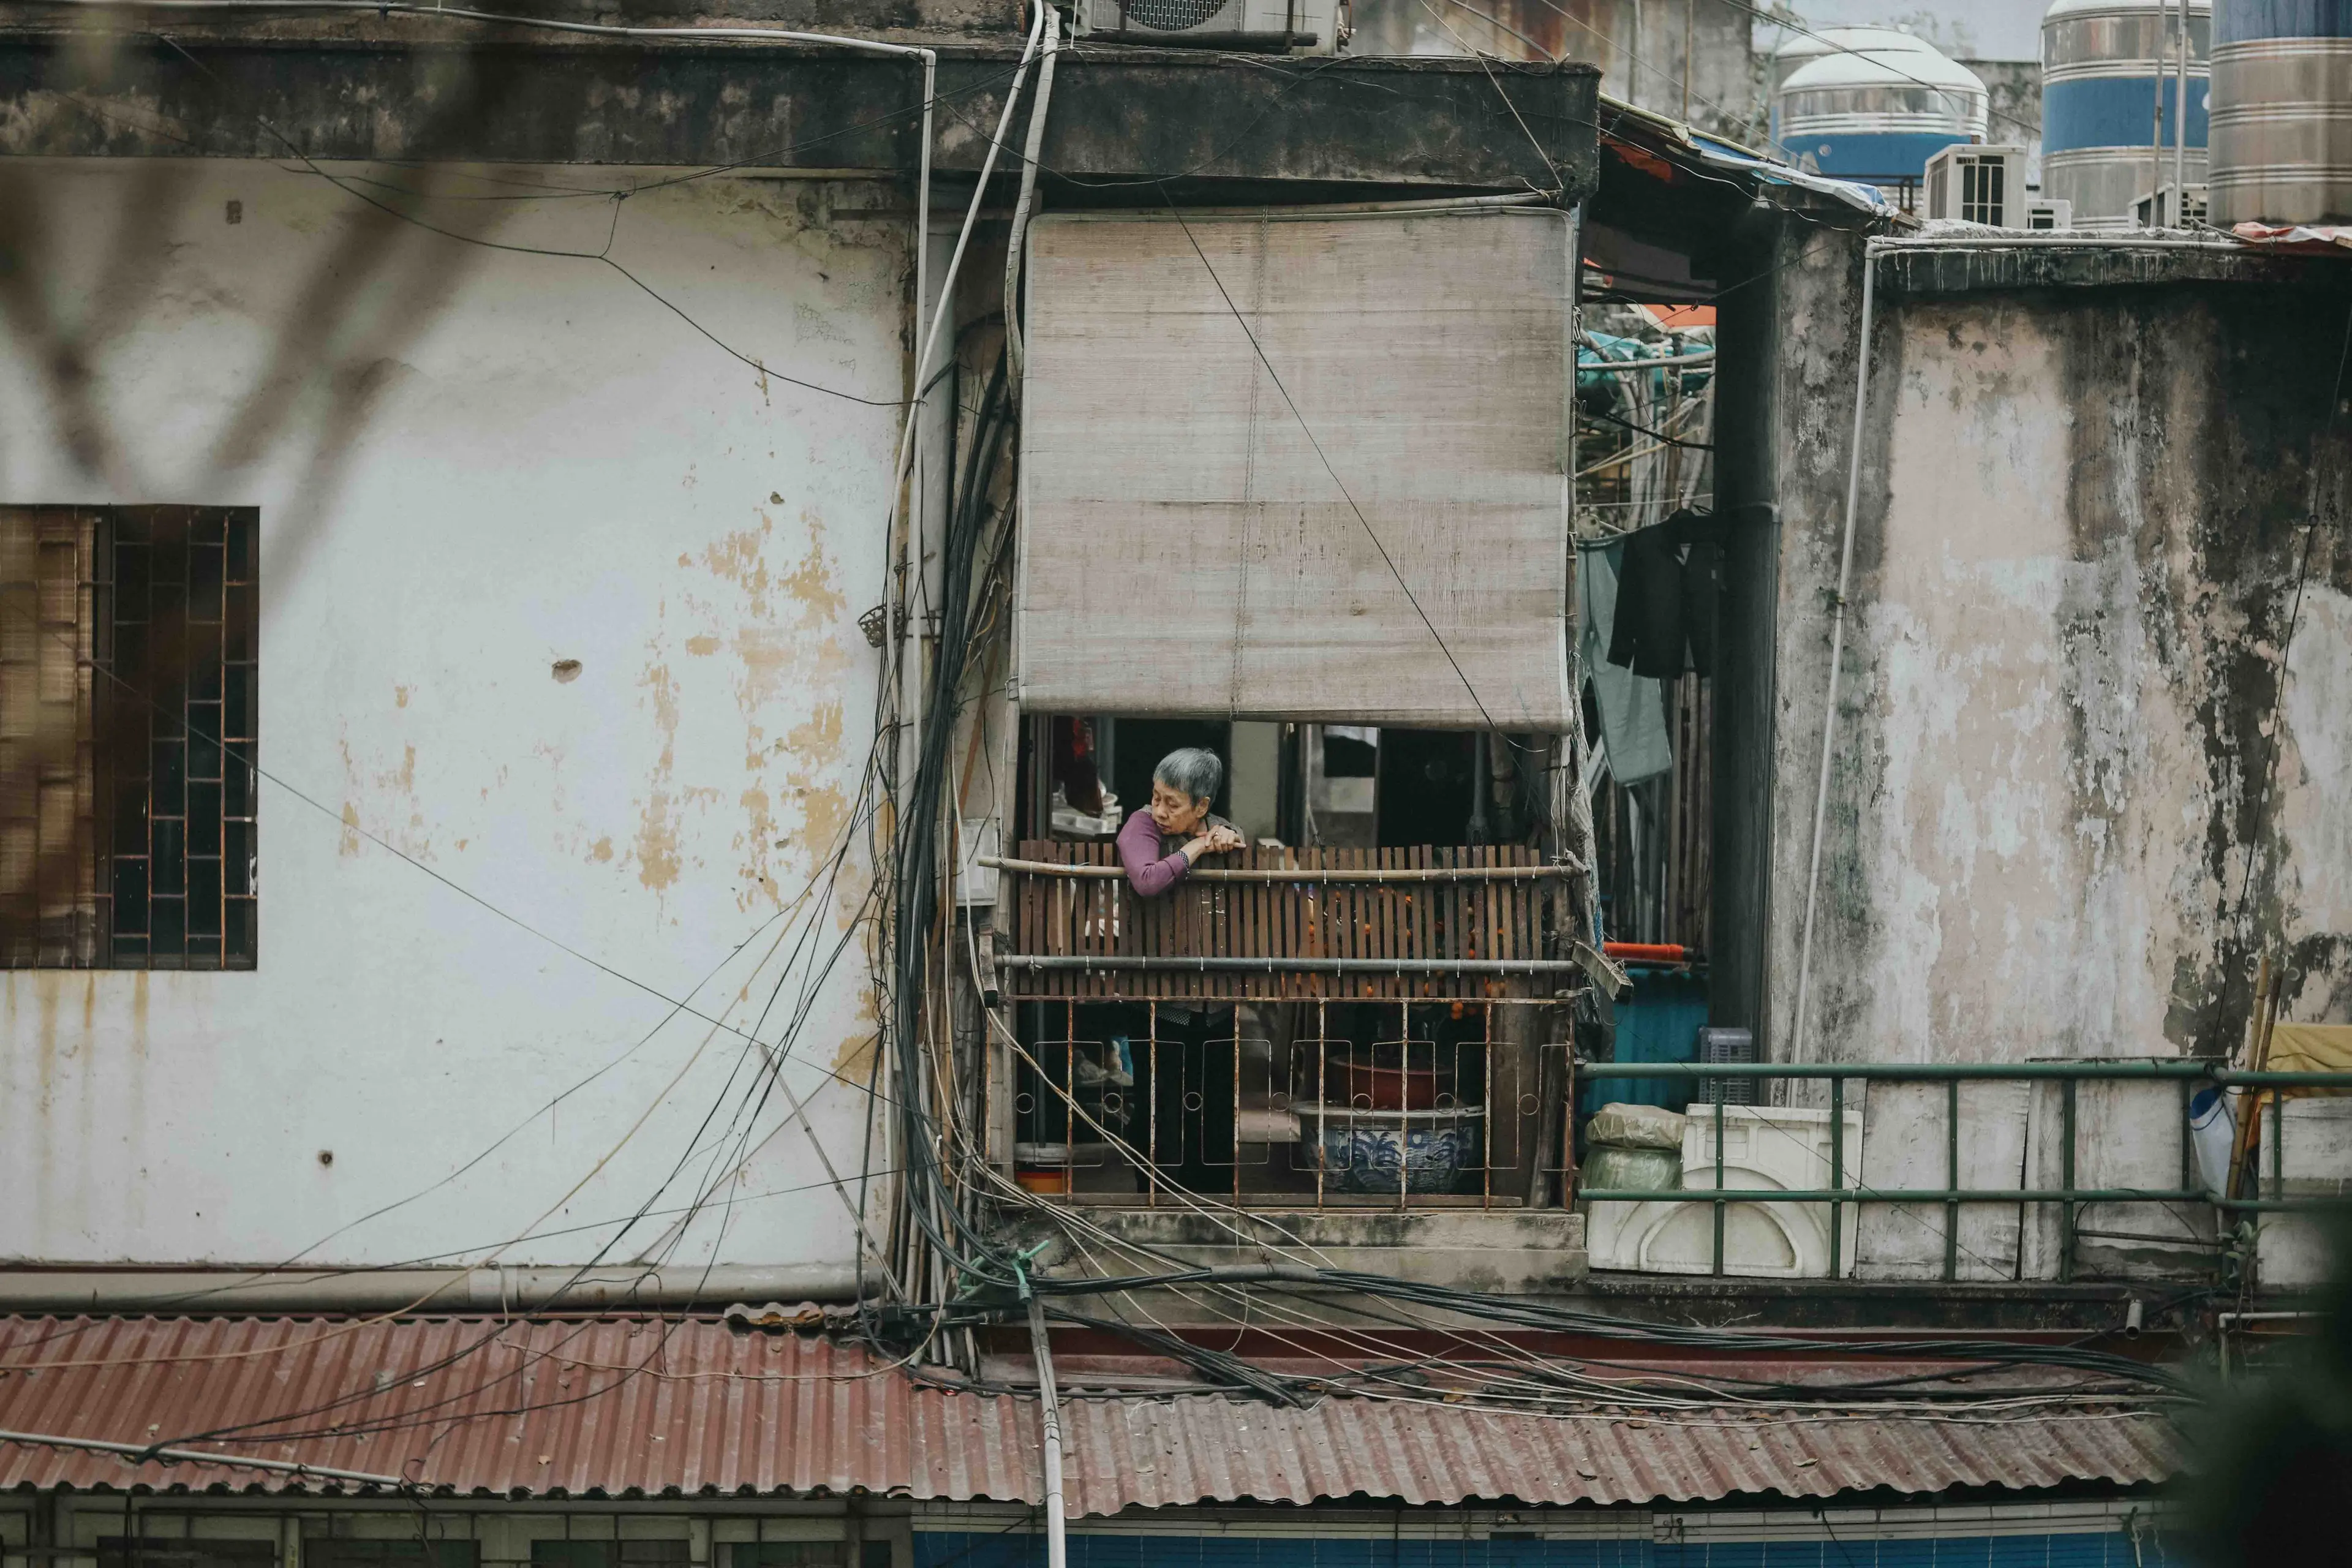 A quick shot of Old Quarter in Hanoi